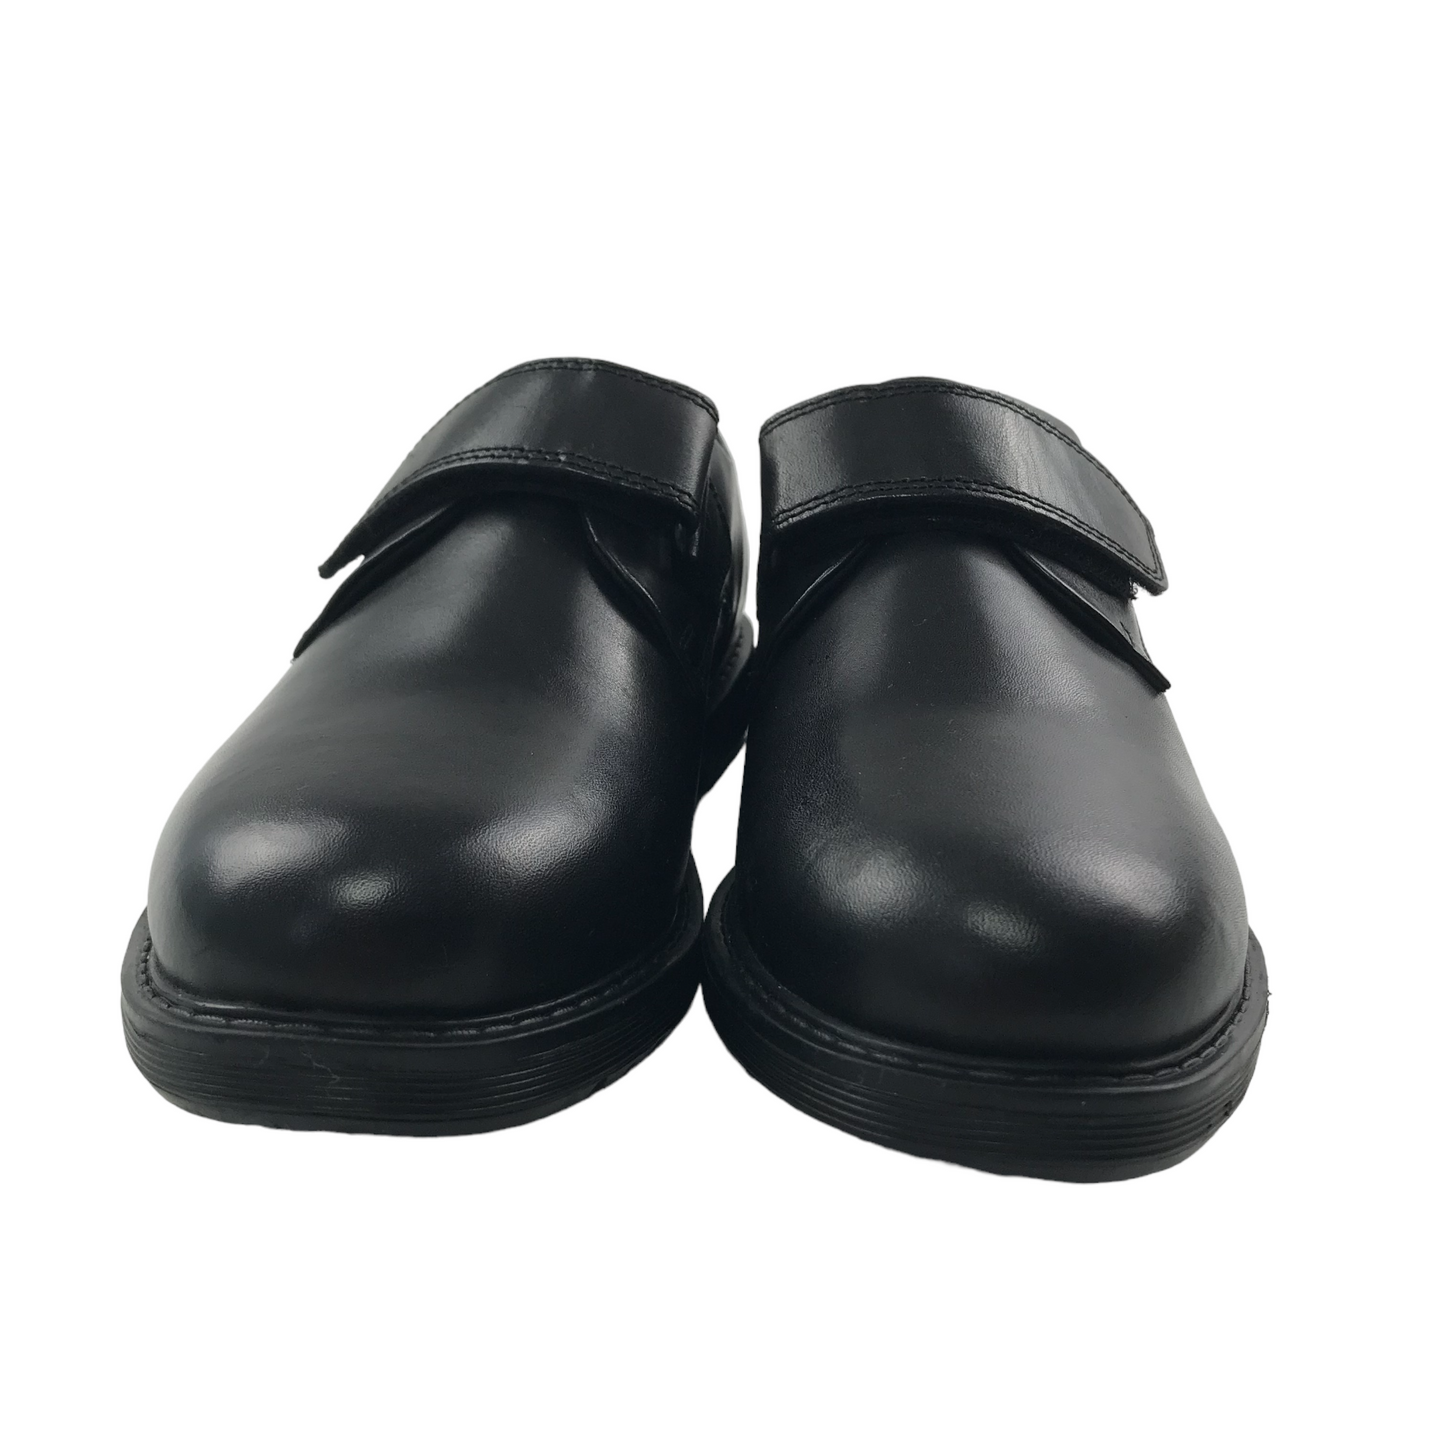 George Black Leather School Shoes Shoe Size 4